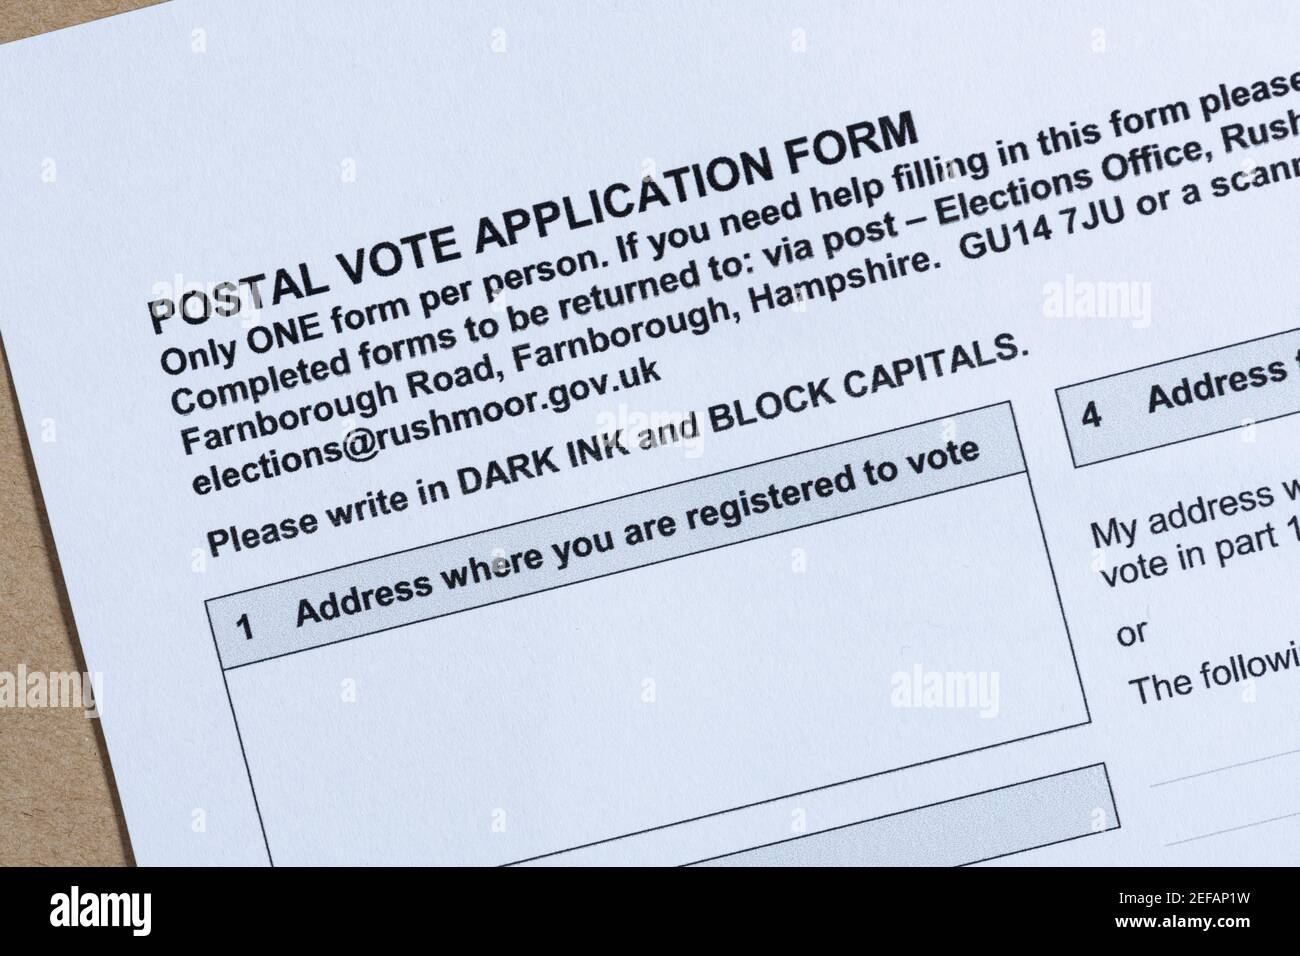 Postal Vote Application Form, UK, 2021 Stockfoto